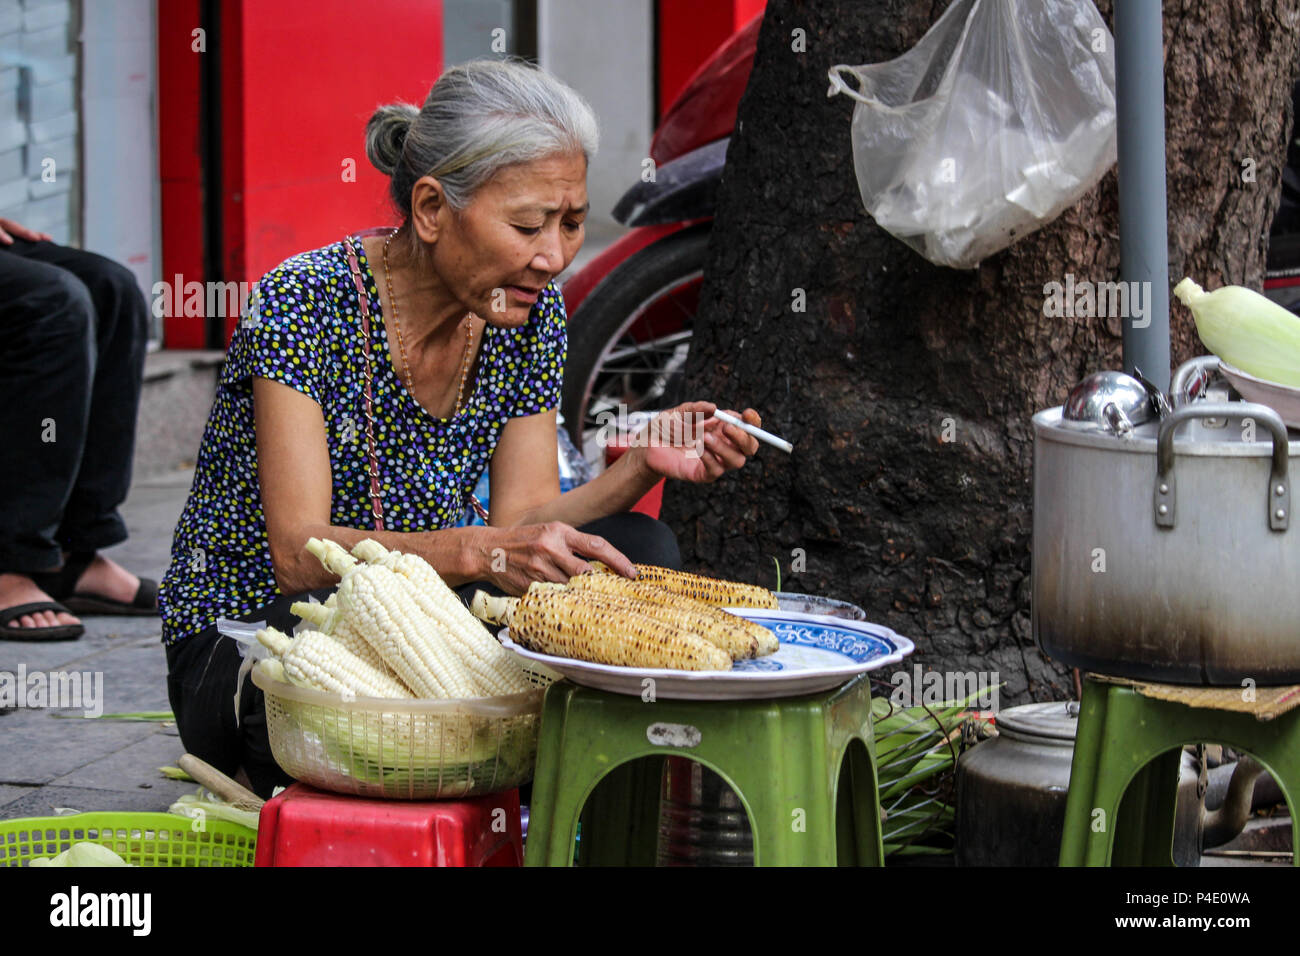 Hanoi, Vietnam - March 15, 2018: Senior lady smoking and selling roasted corn on the street Stock Photo